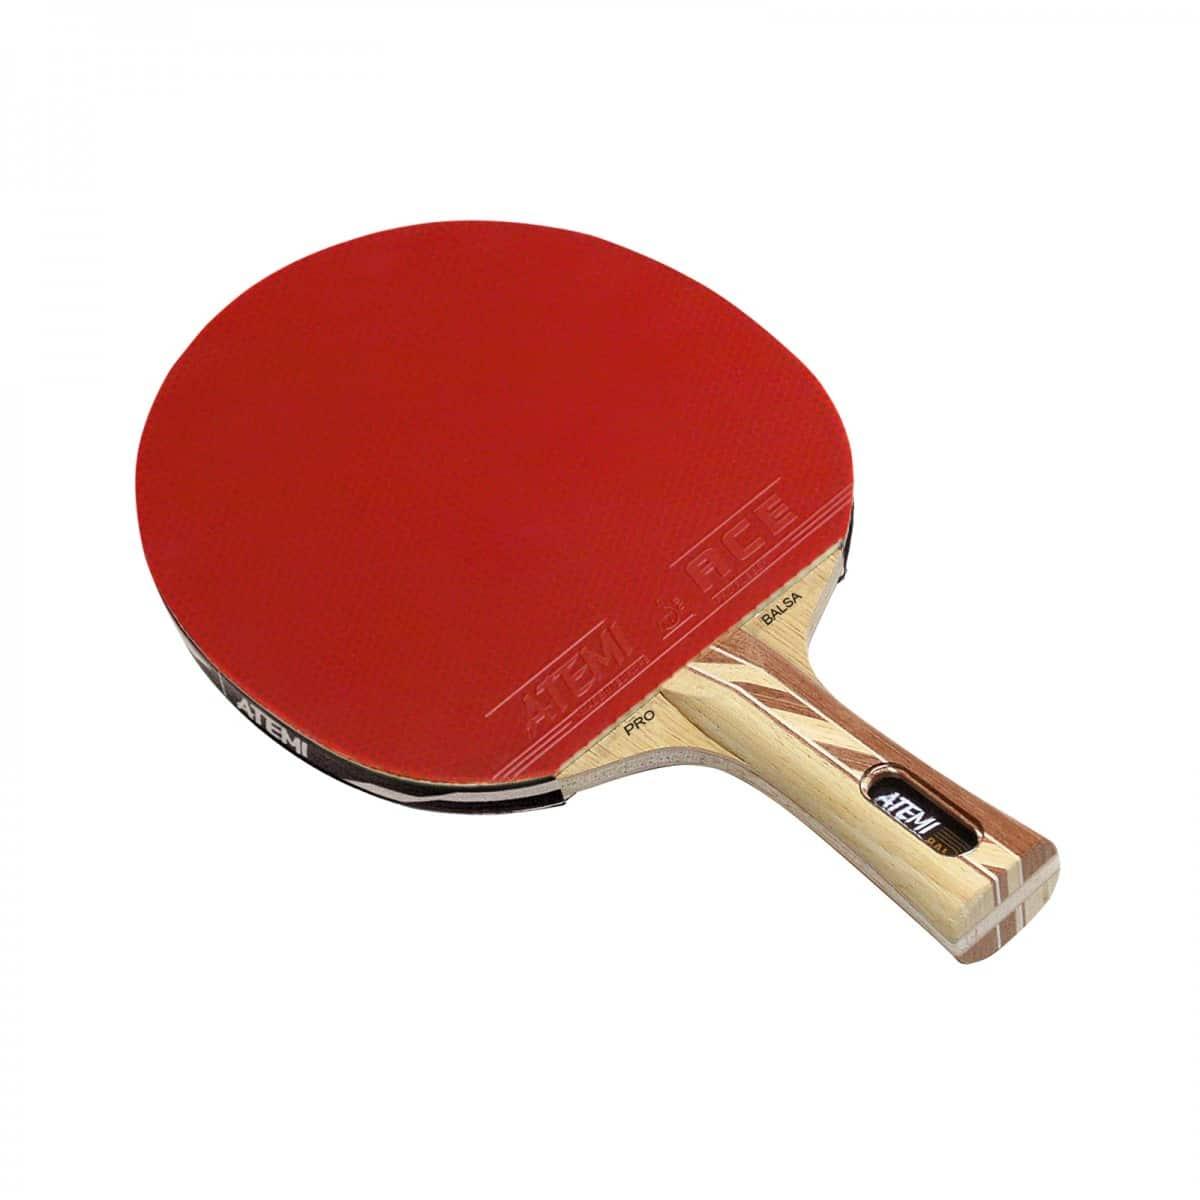 Atemi 4000 Table Tennis Bat